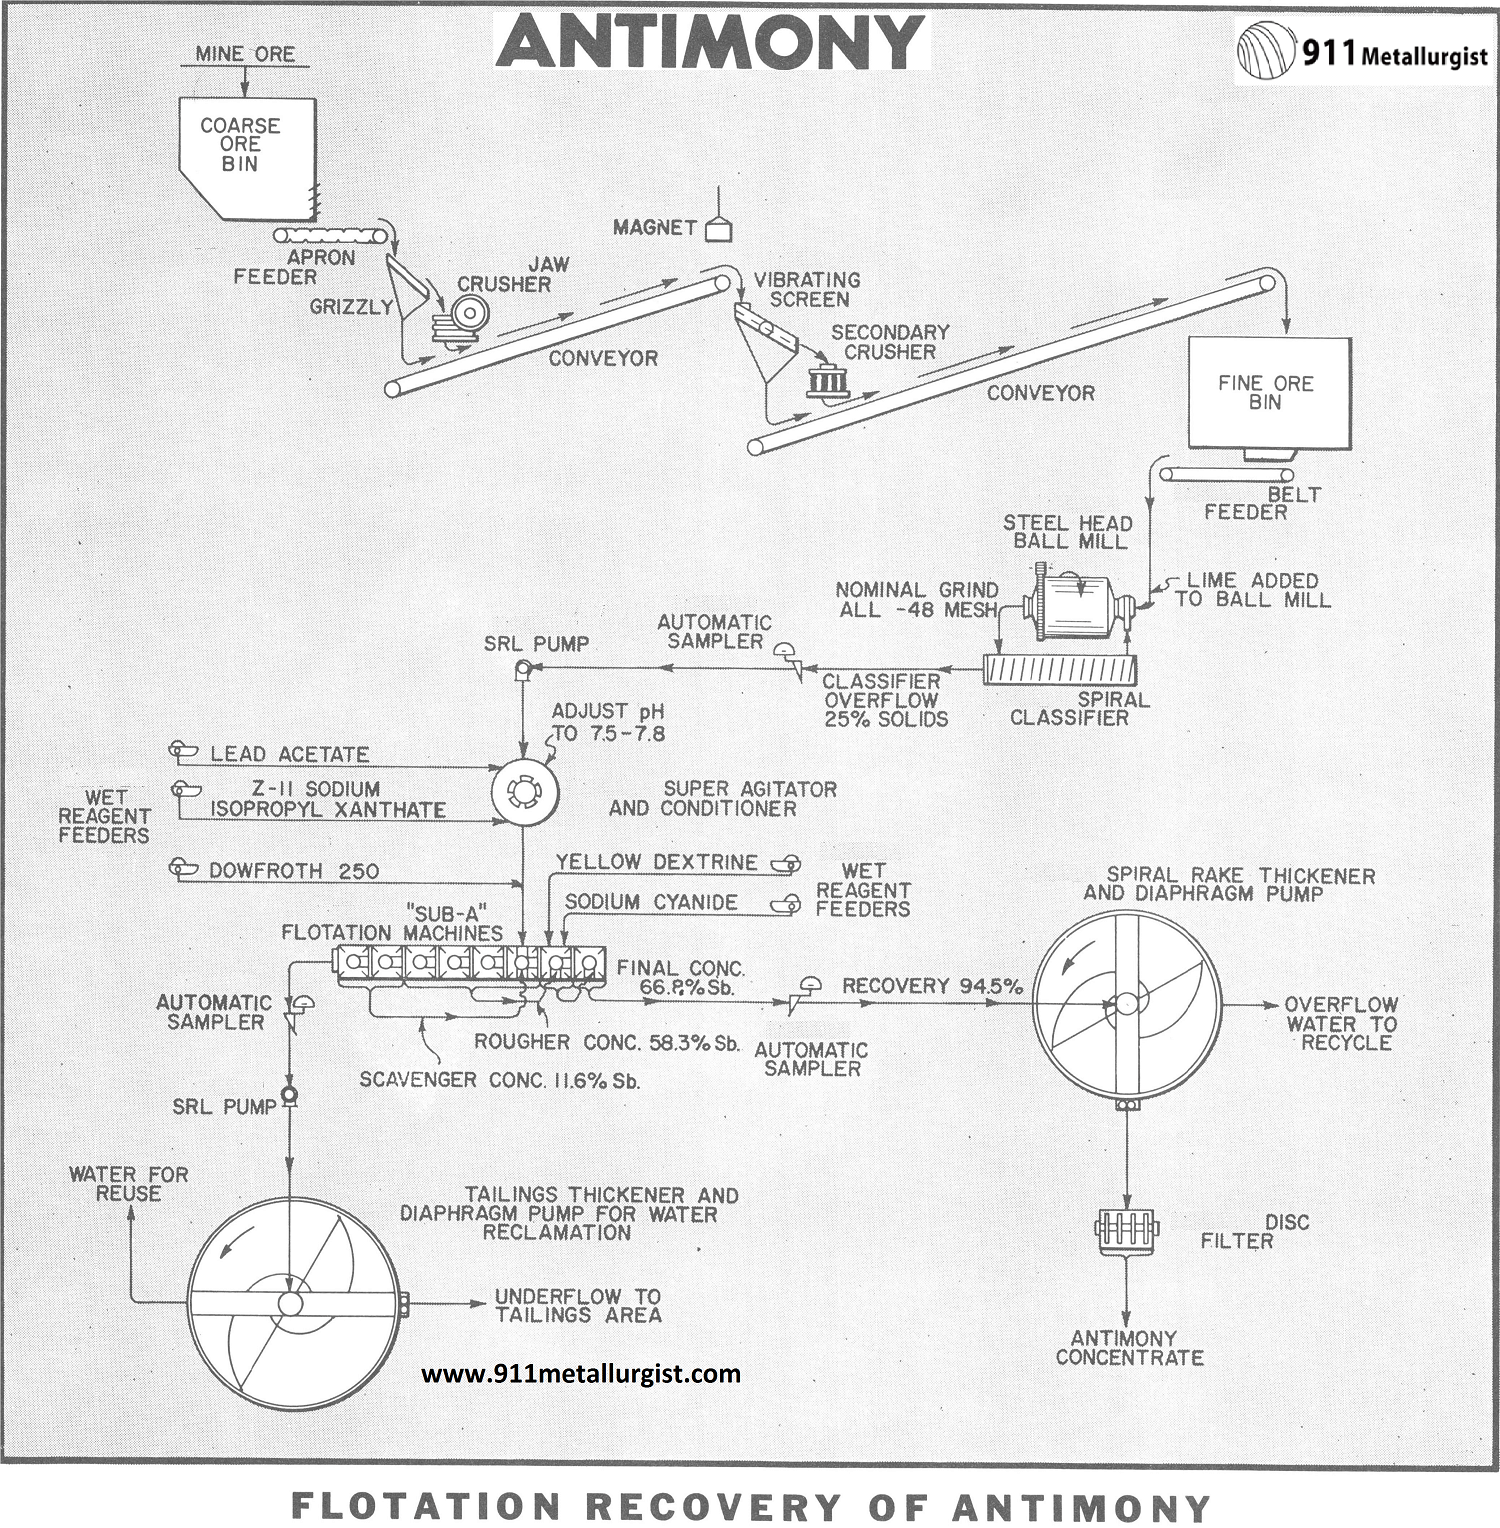 Flotation Recovery of Antimony